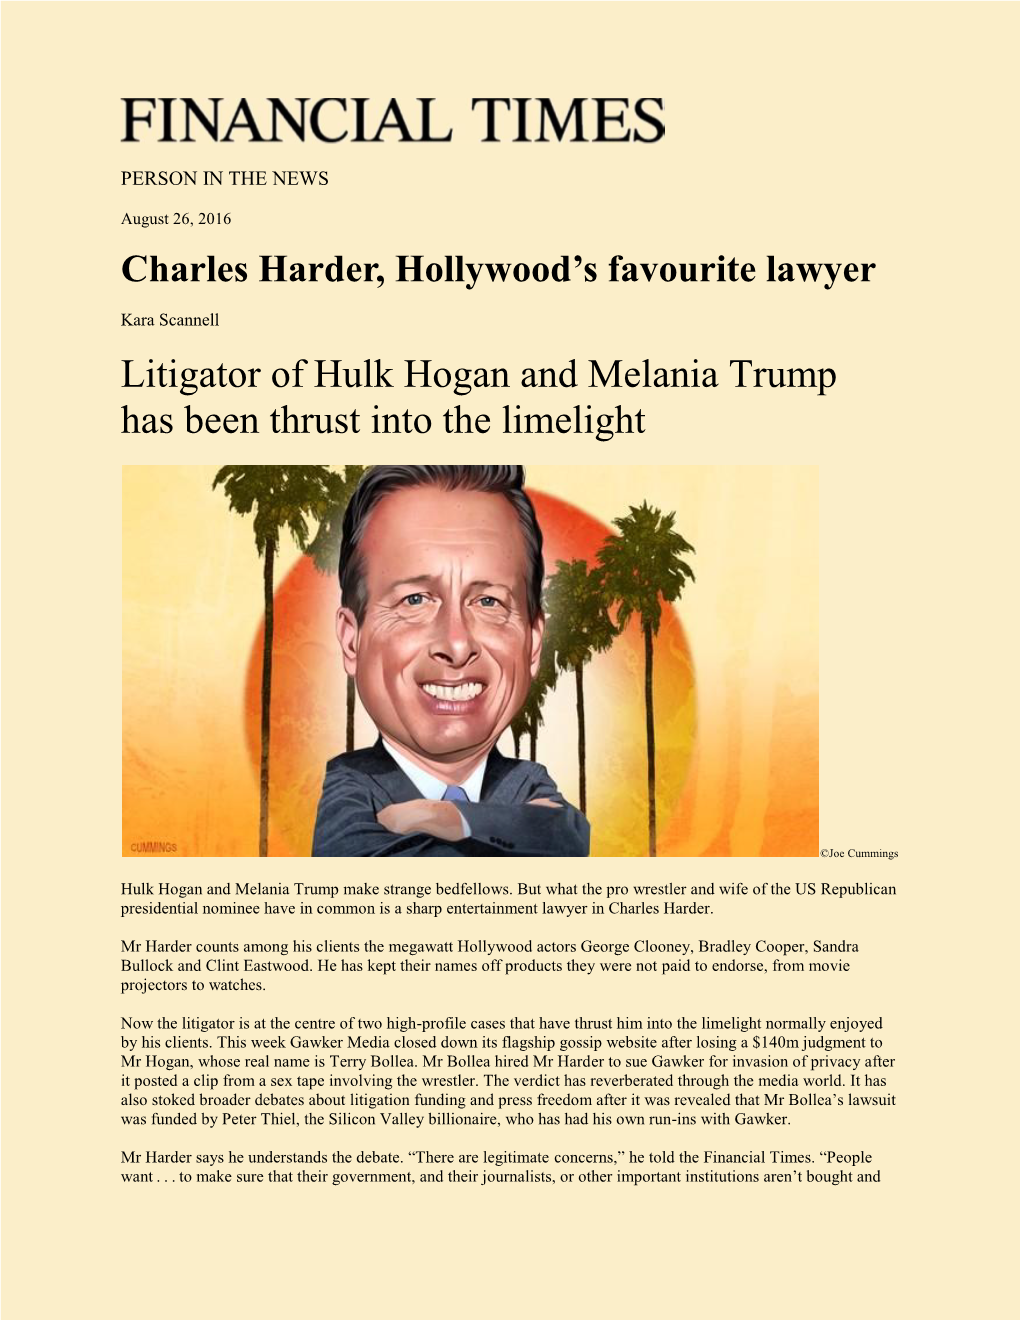 Litigator of Hulk Hogan and Melania Trump Has Been Thrust Into the Limelight